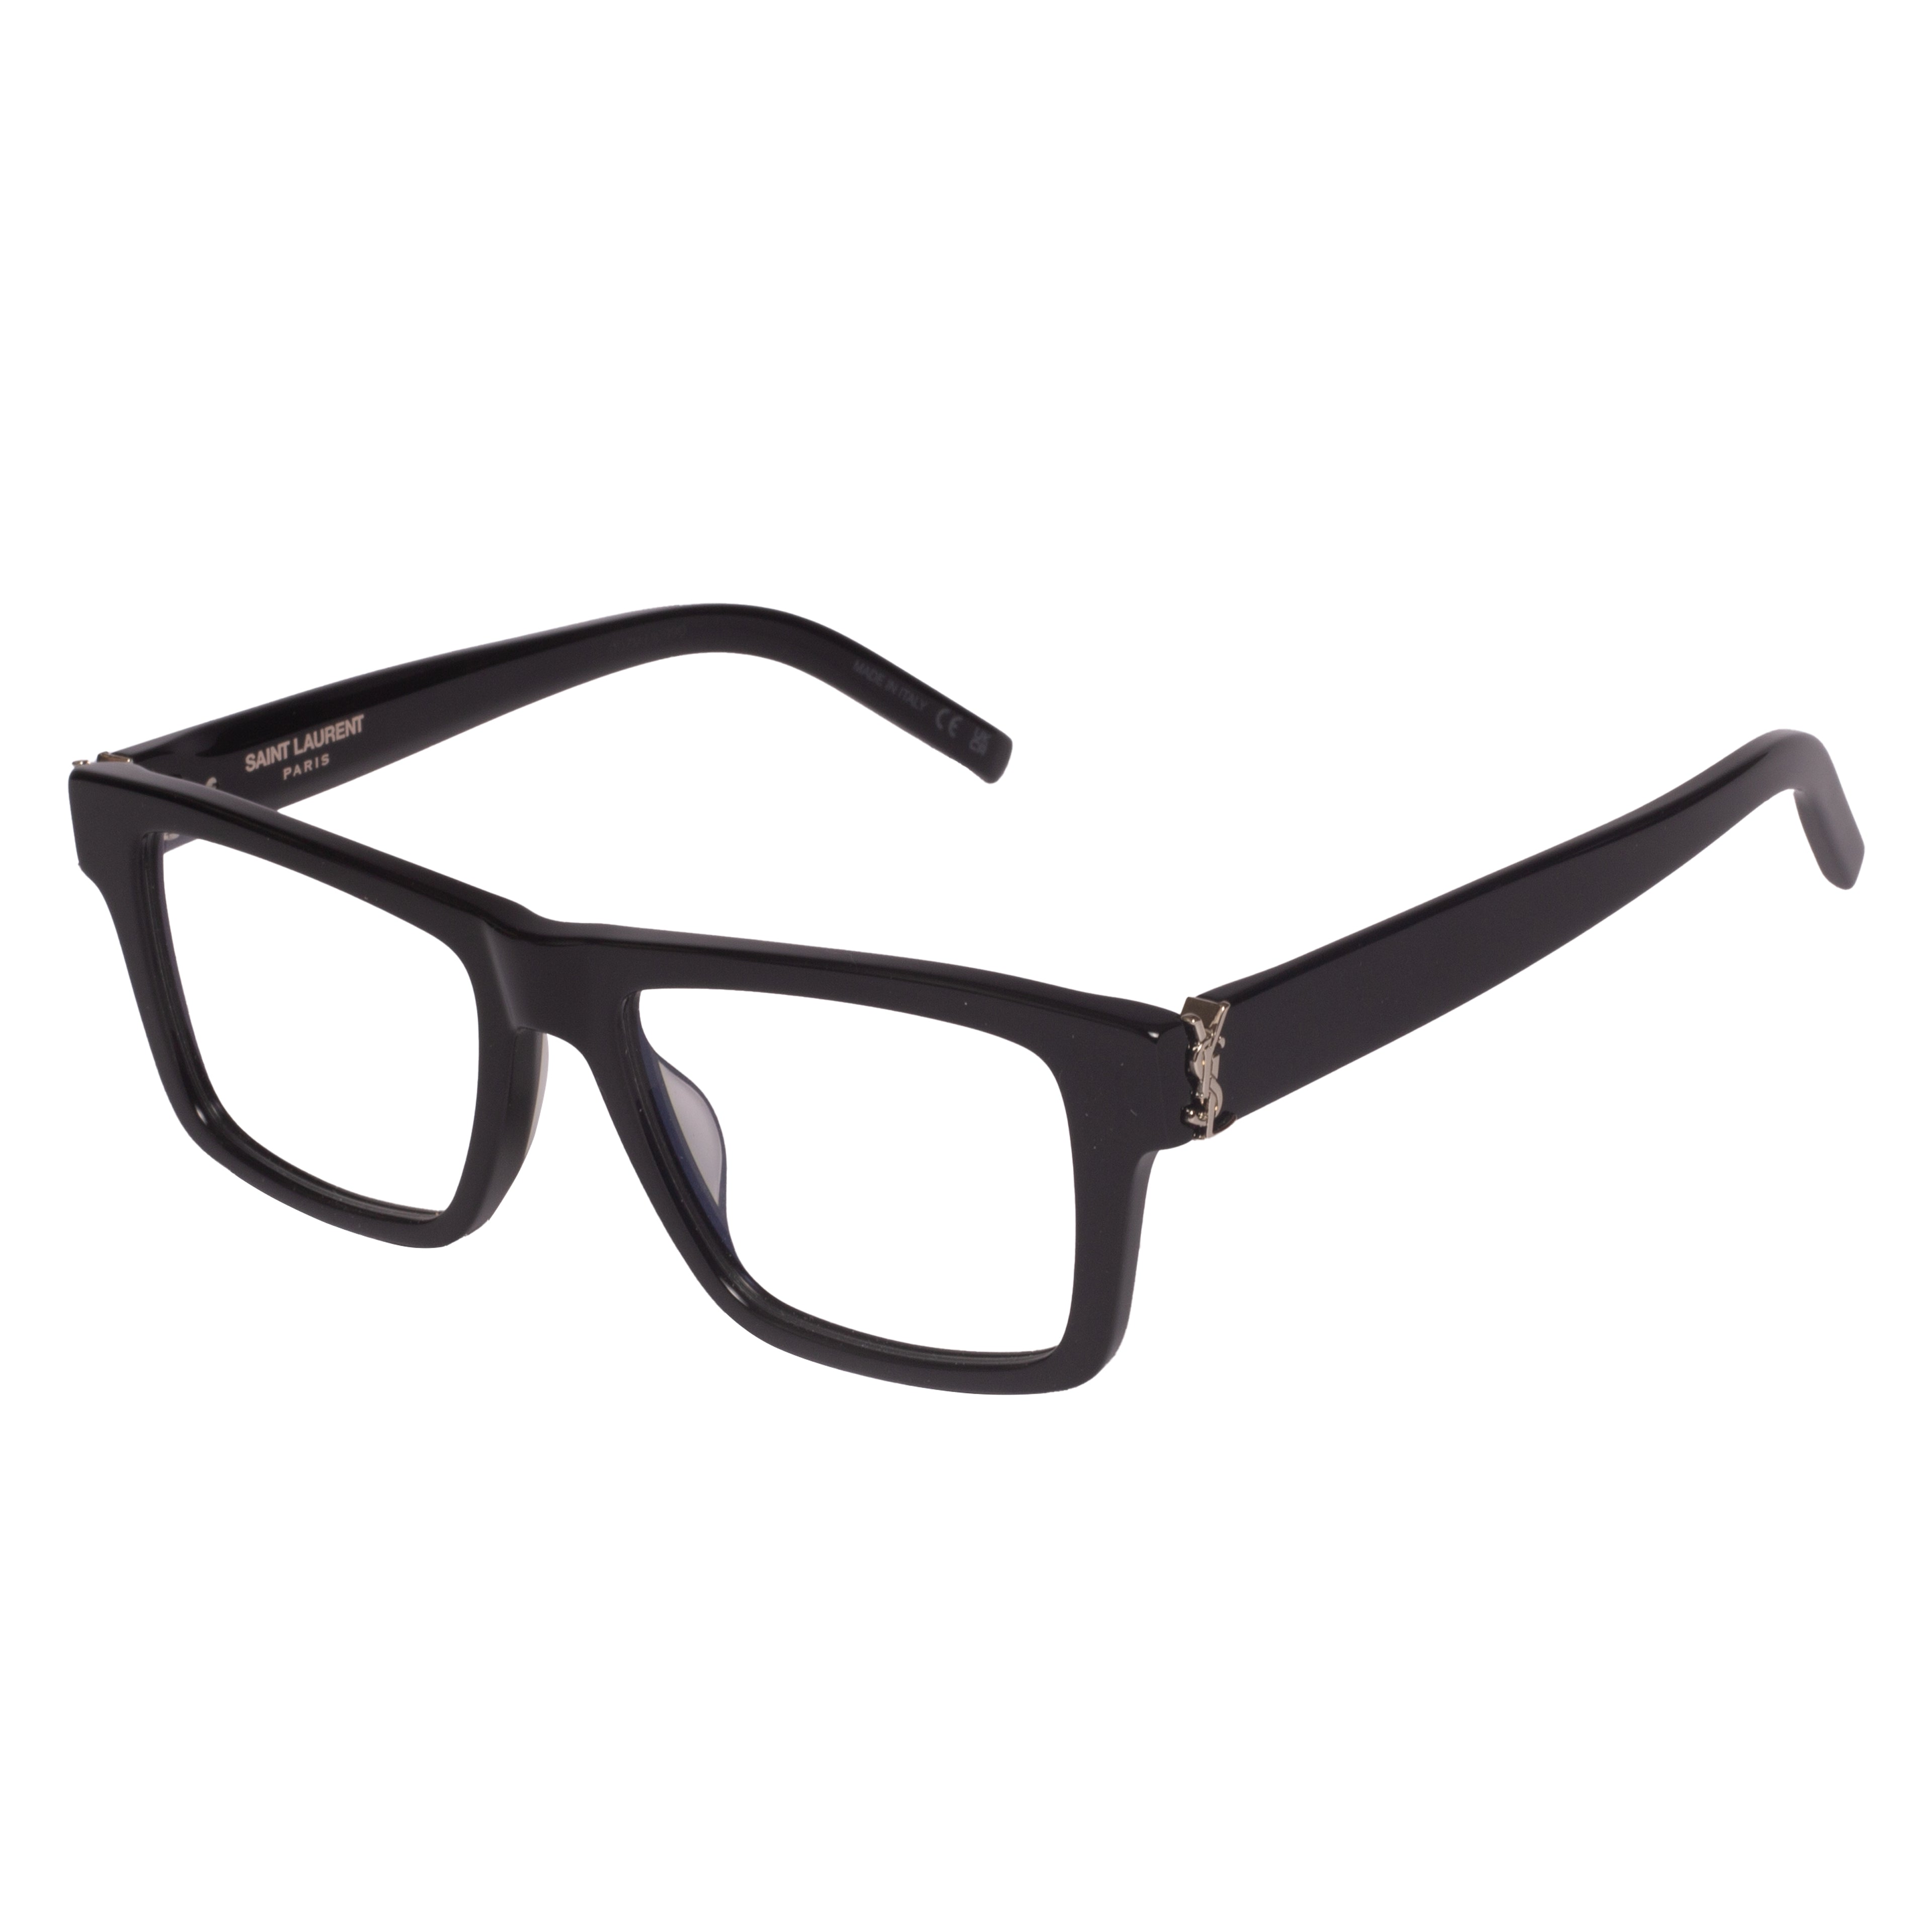 Saint Laurent-SL M10-B-52-001 Eyeglasses - Premium Eyeglasses from Saint Laurent - Just Rs. 26400! Shop now at Laxmi Opticians